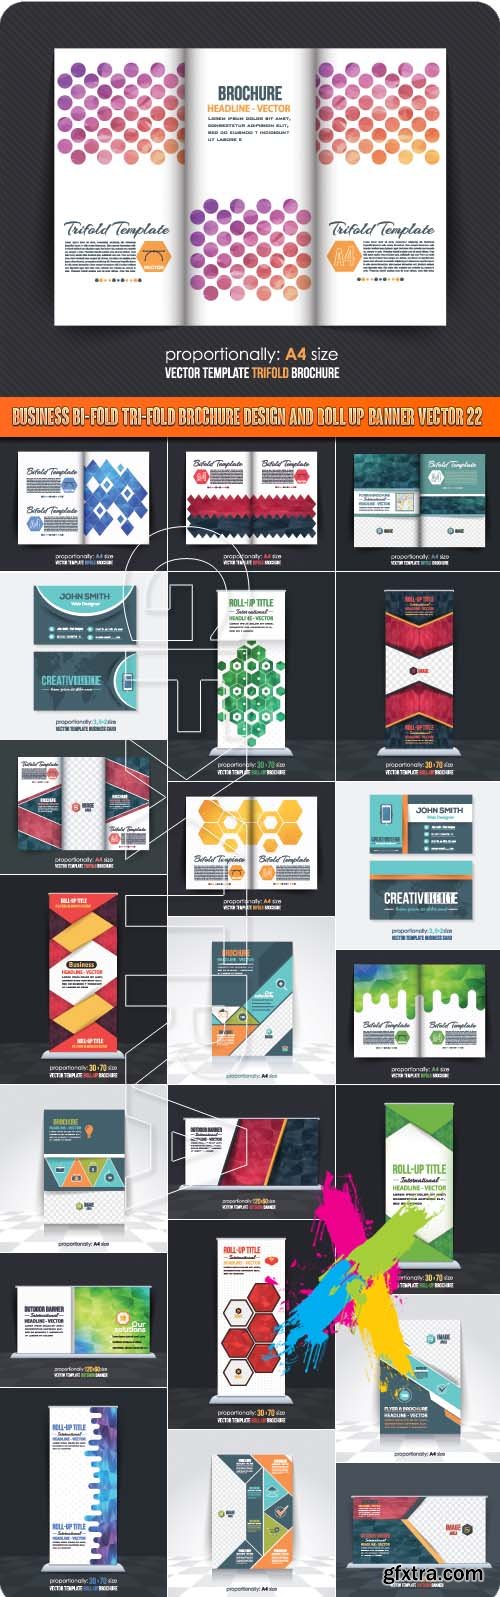 Business Bi-Fold Tri-Fold Brochure Design and Roll up banner vector 22